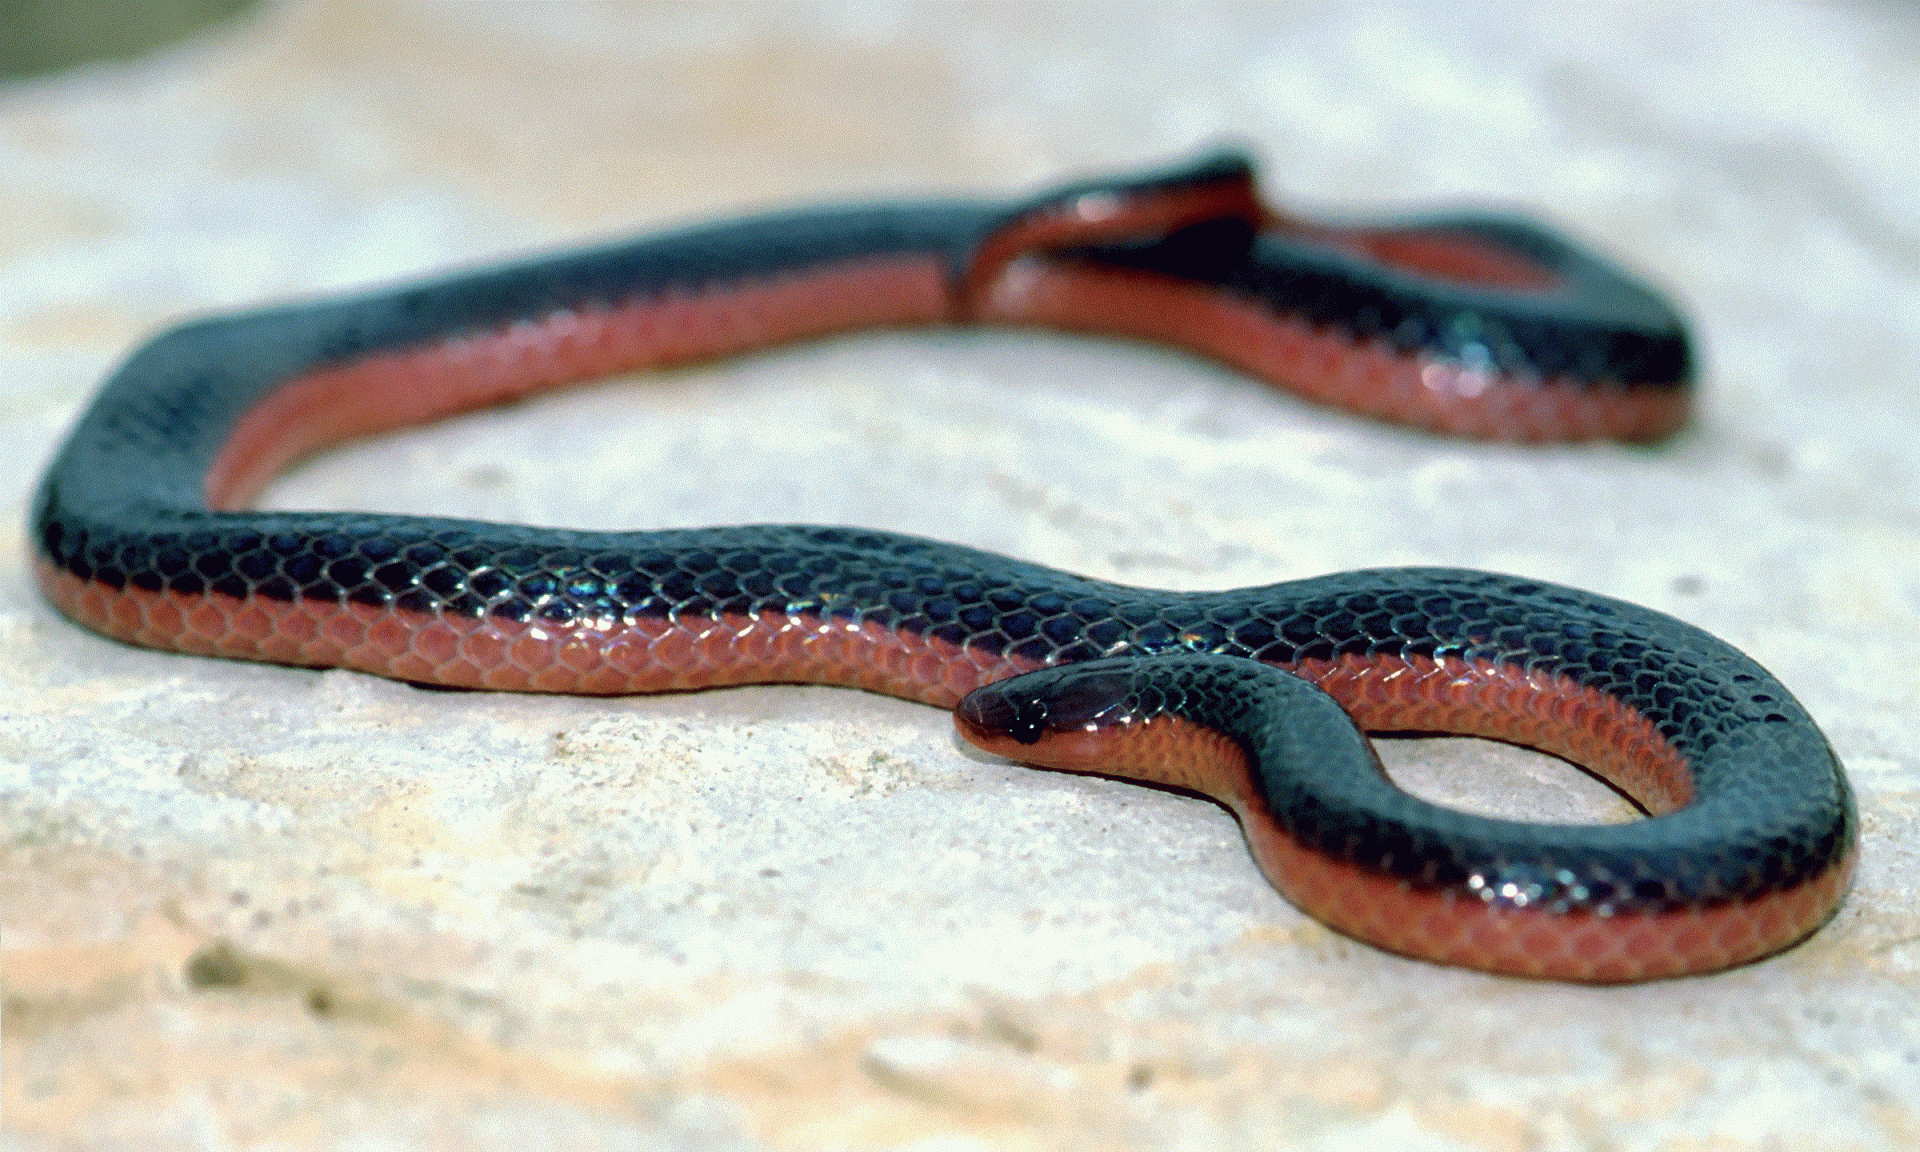  Worm Snake